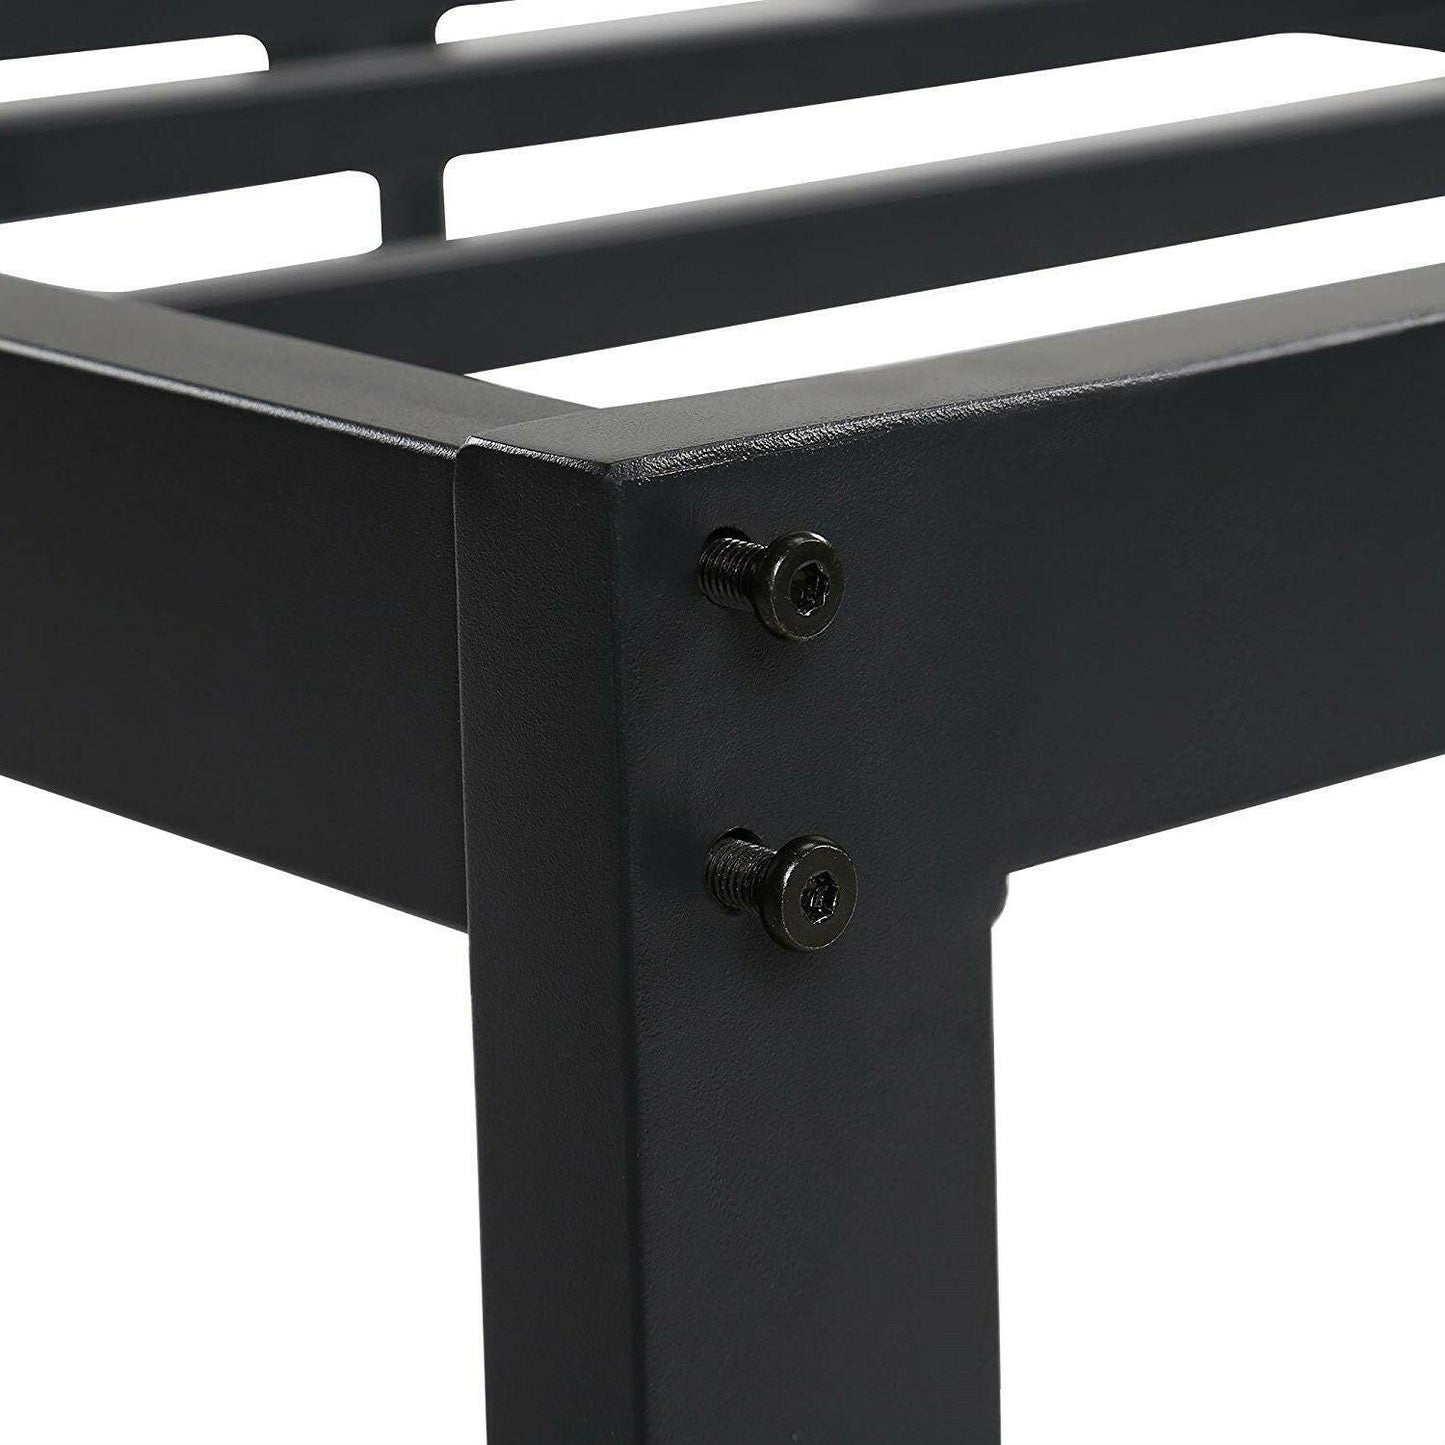 Twin XL size Heavy Duty Black Metal Platform Bed Frame - FurniFindUSA